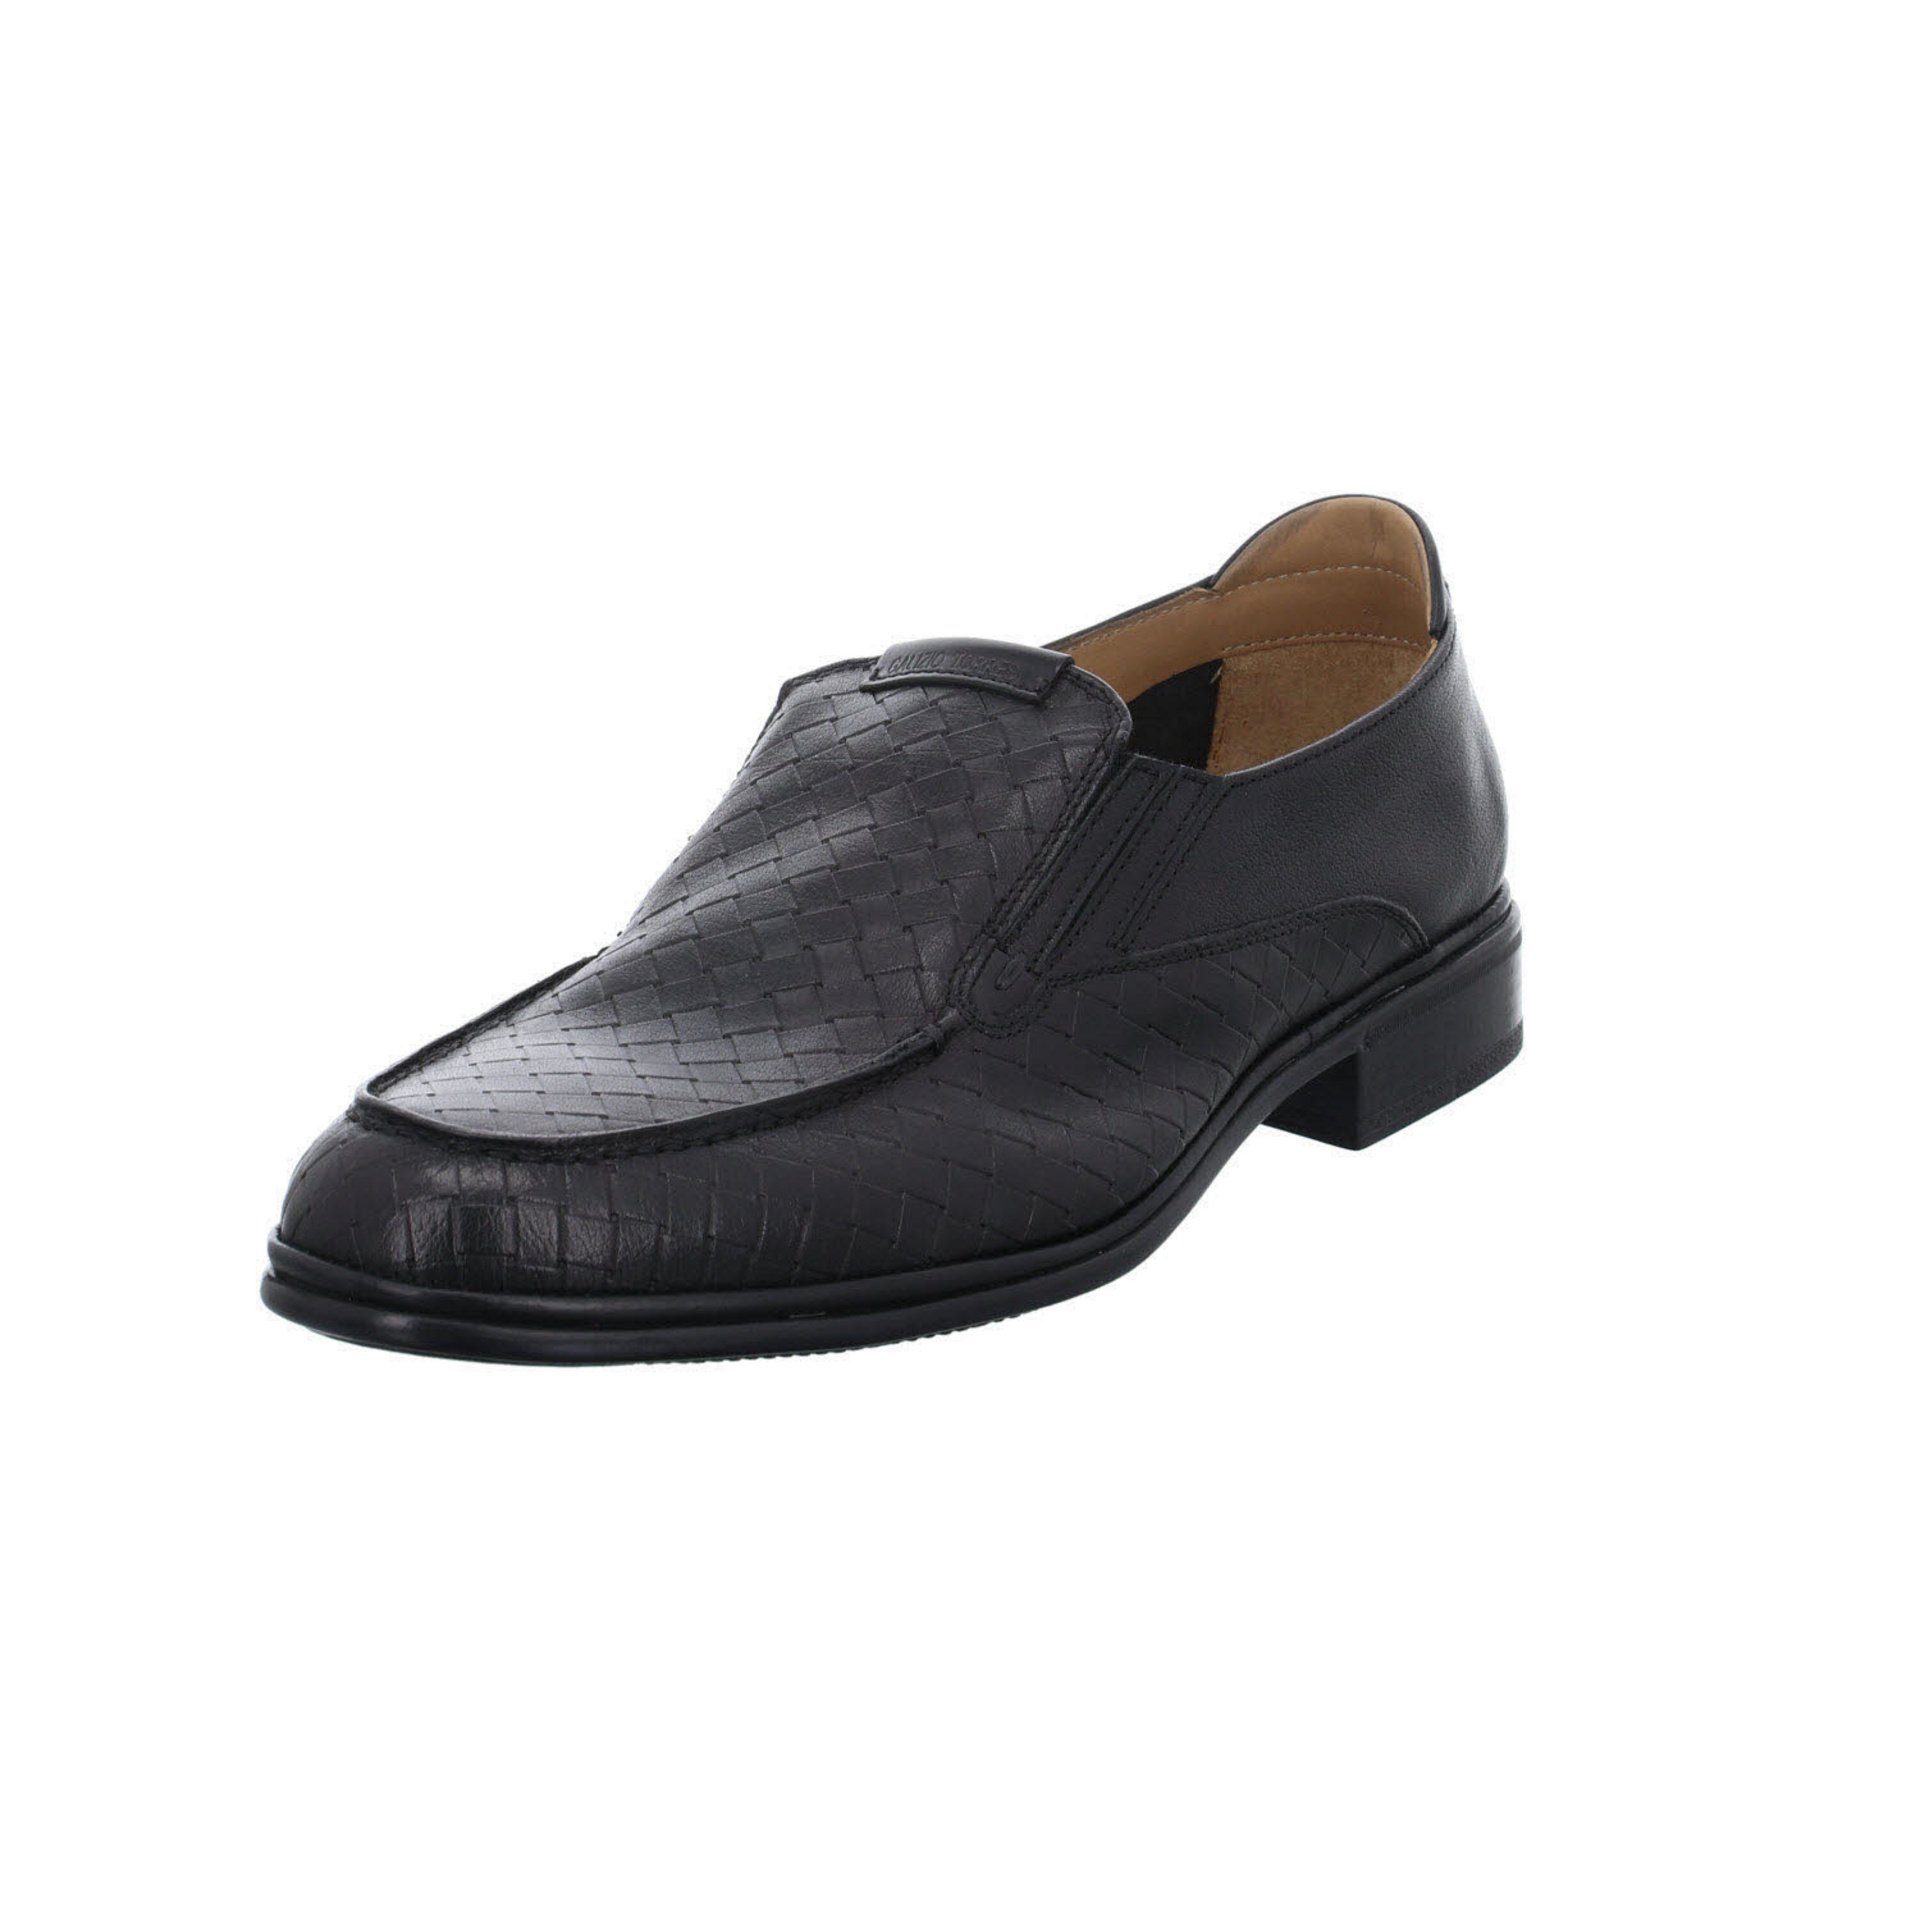 Galizio Torresi »Herren Slipper Schuhe Slipper« Slipper online kaufen | OTTO